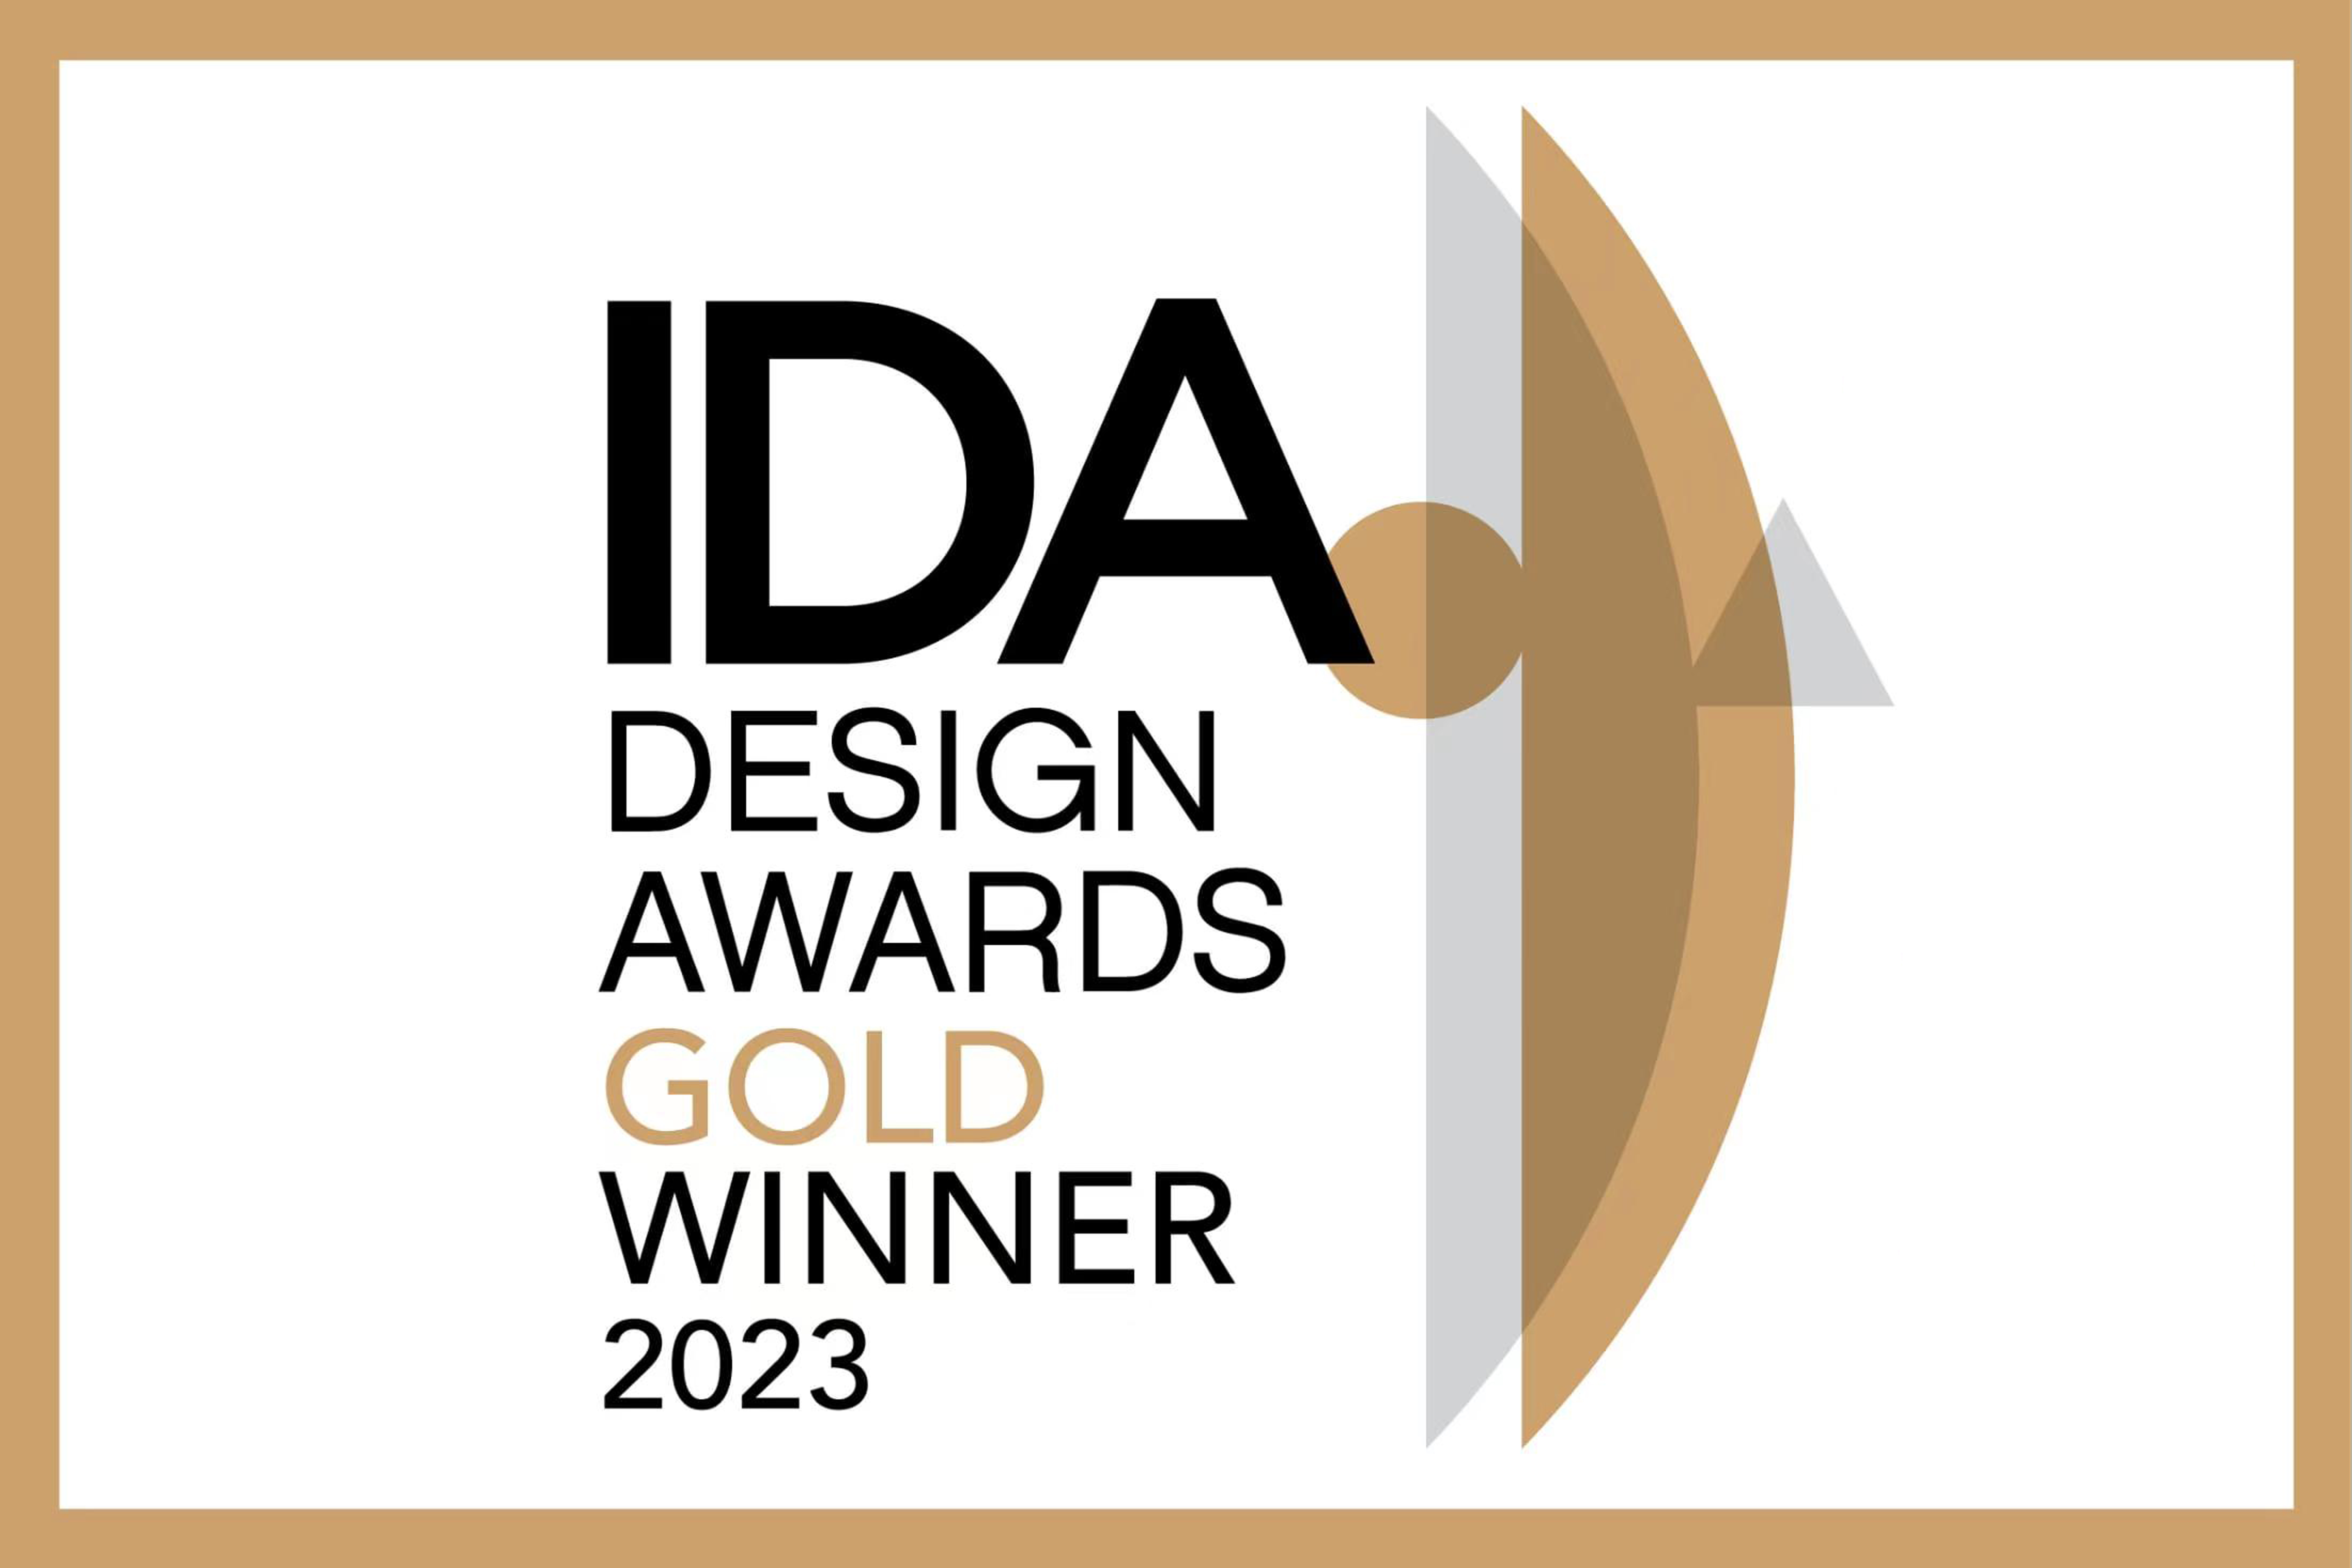 2023 International Design Awards – GOLD WINNER